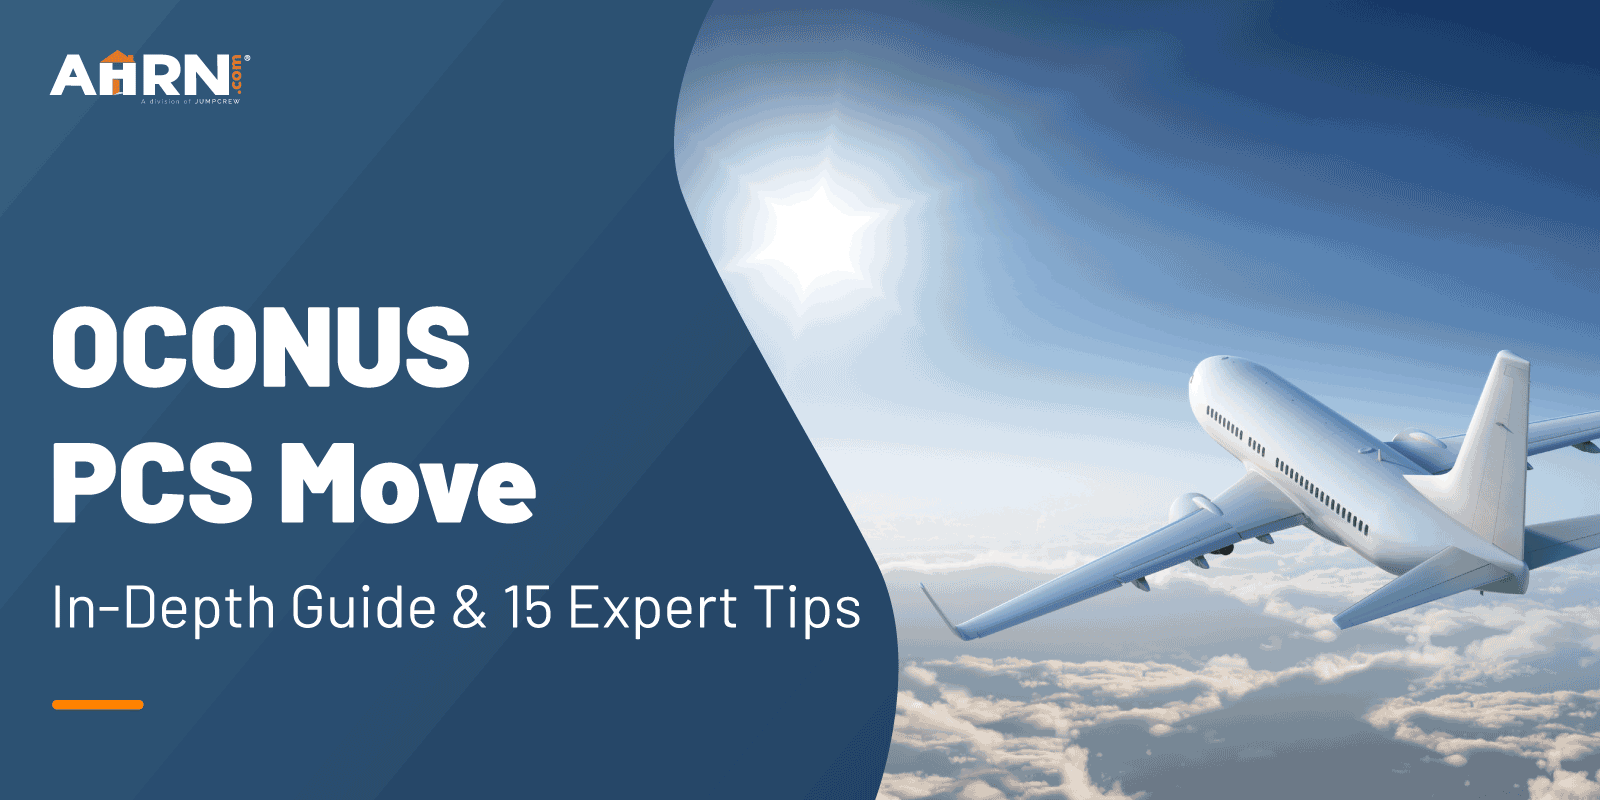 OCONUS PCS Move: An In-Depth Guide & 15 Expert Tips